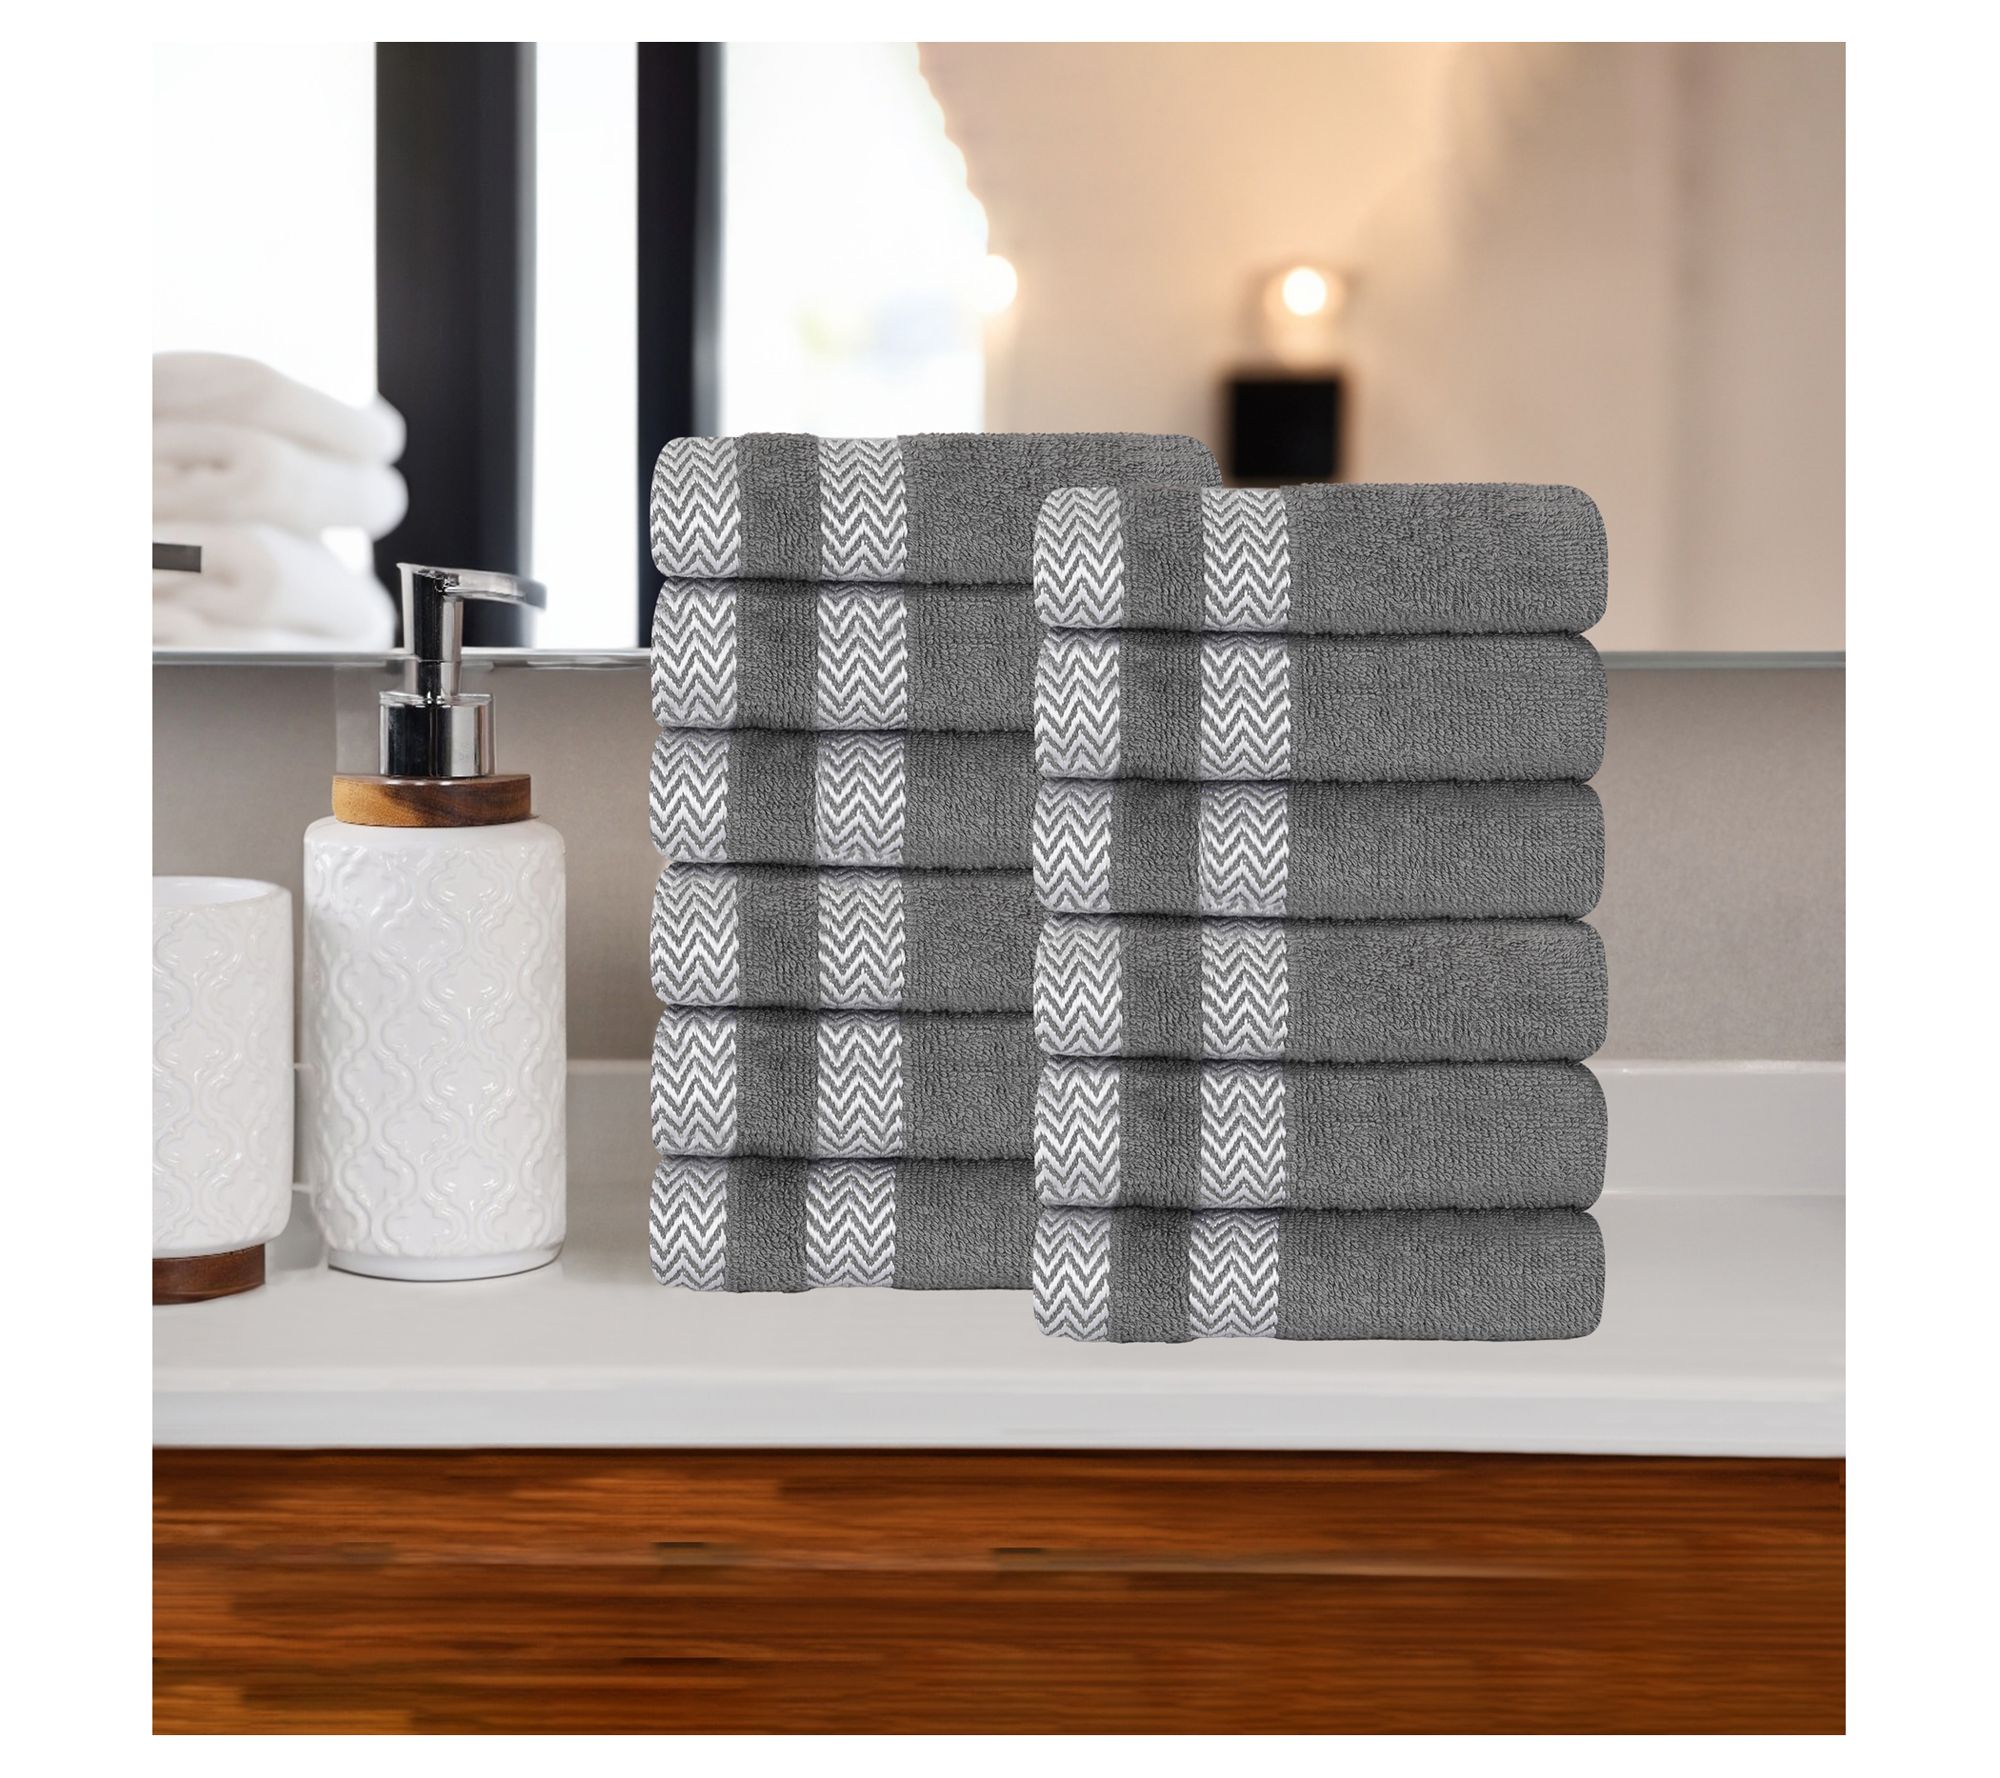 Zero Twist Cotton Solid Chevron Dobby Border Super Soft 12 Piece Assorted Bathroom  Towel Set, Black - Blue Nile Mills : Target